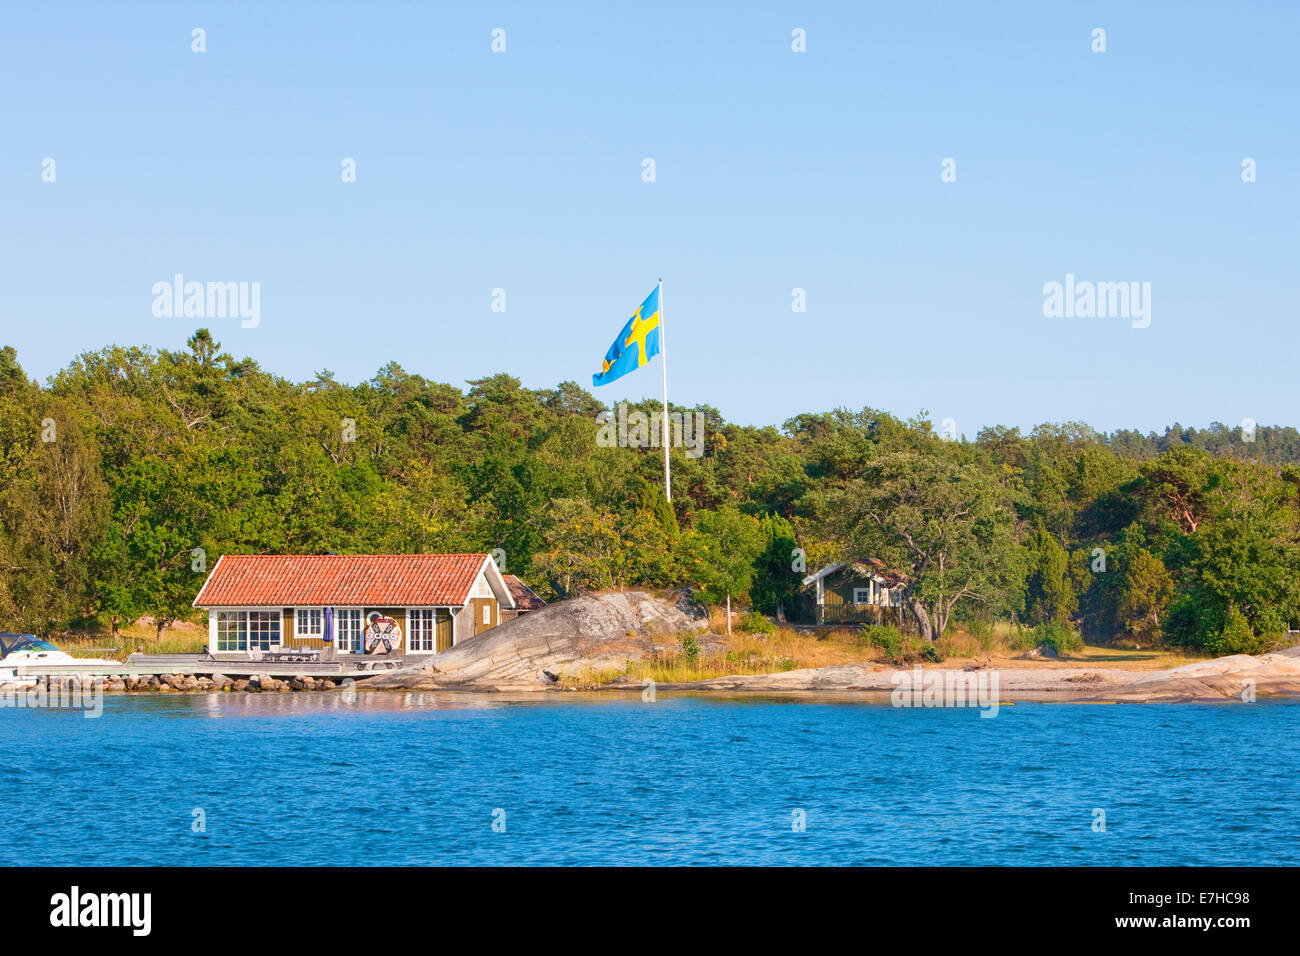 Sweden, Stockholm - House on island in archipelago with swedish flag on pole. Stock Photo